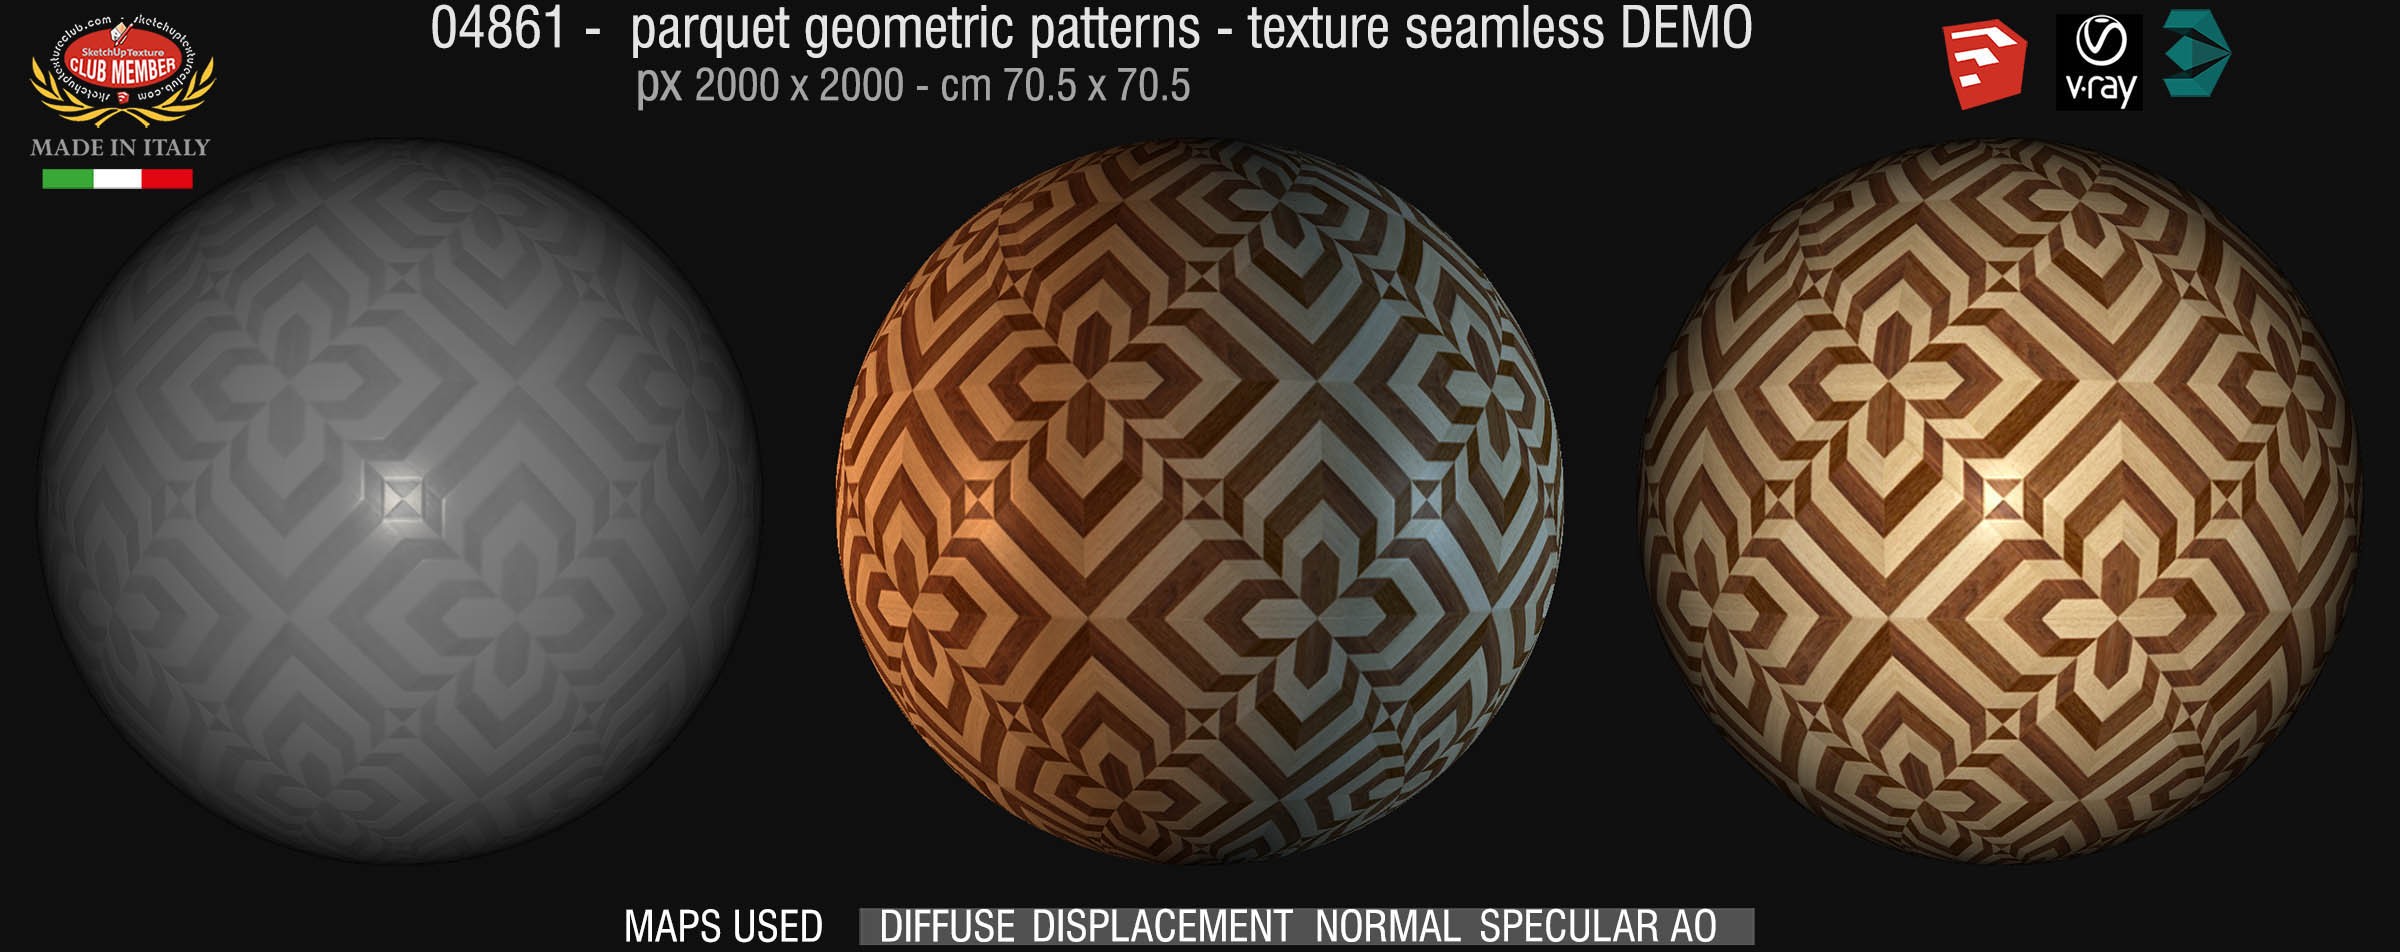 04861 Parquet geometric pattern texture seamless + maps DEMO